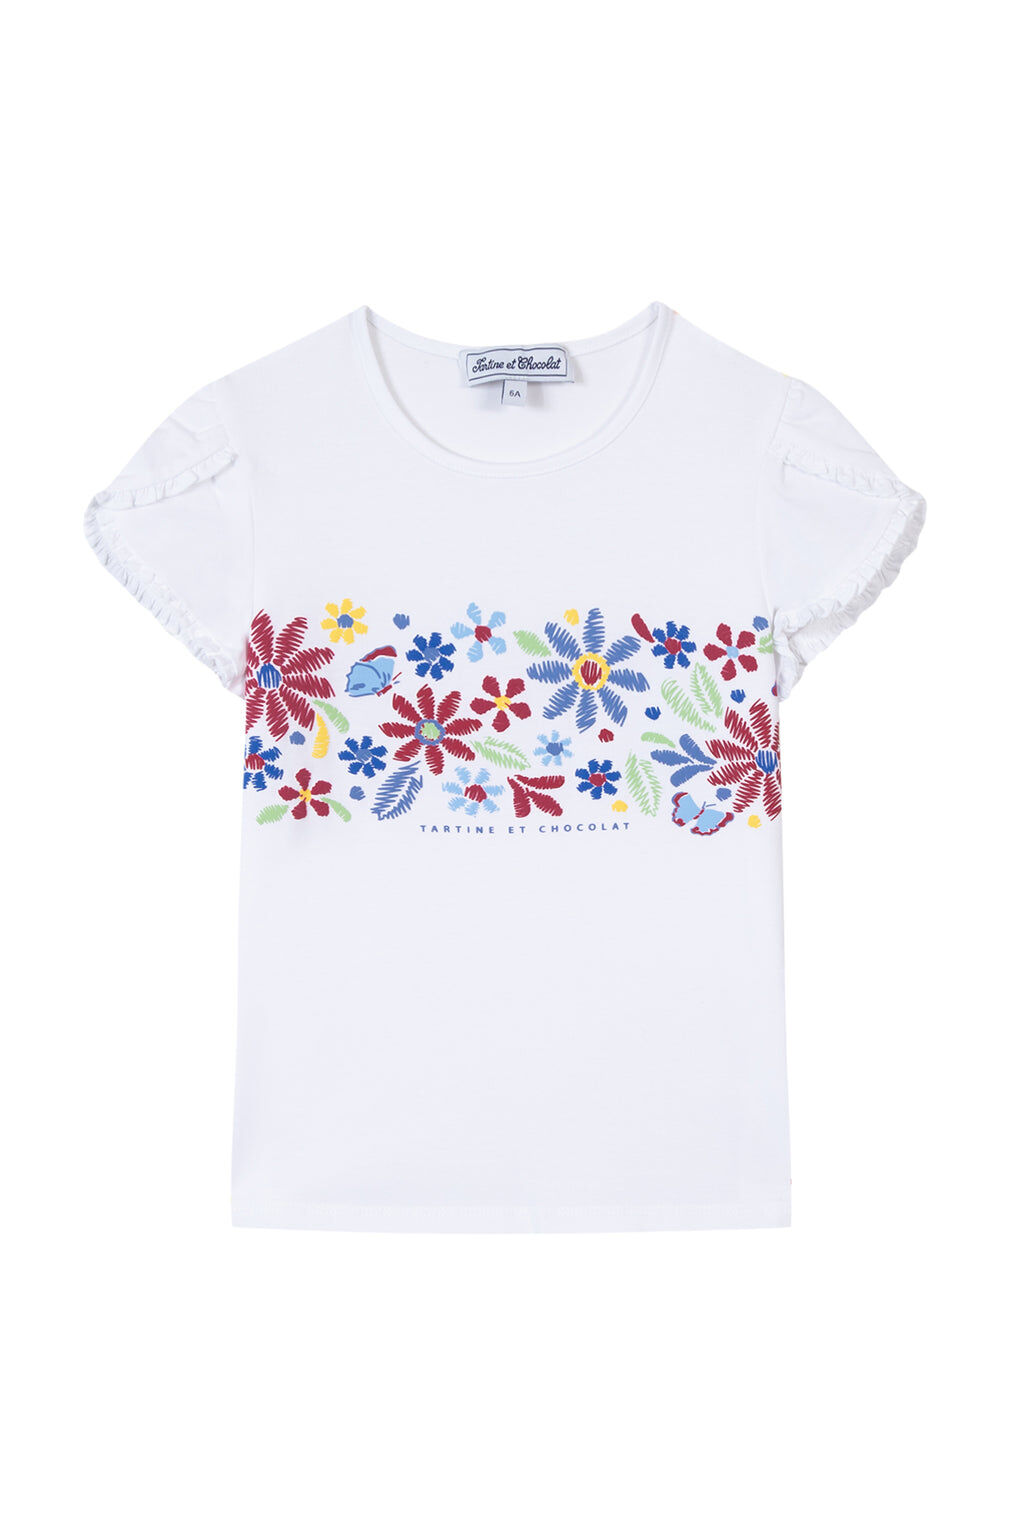 T-shirt - Bougainvillea Illustration flower